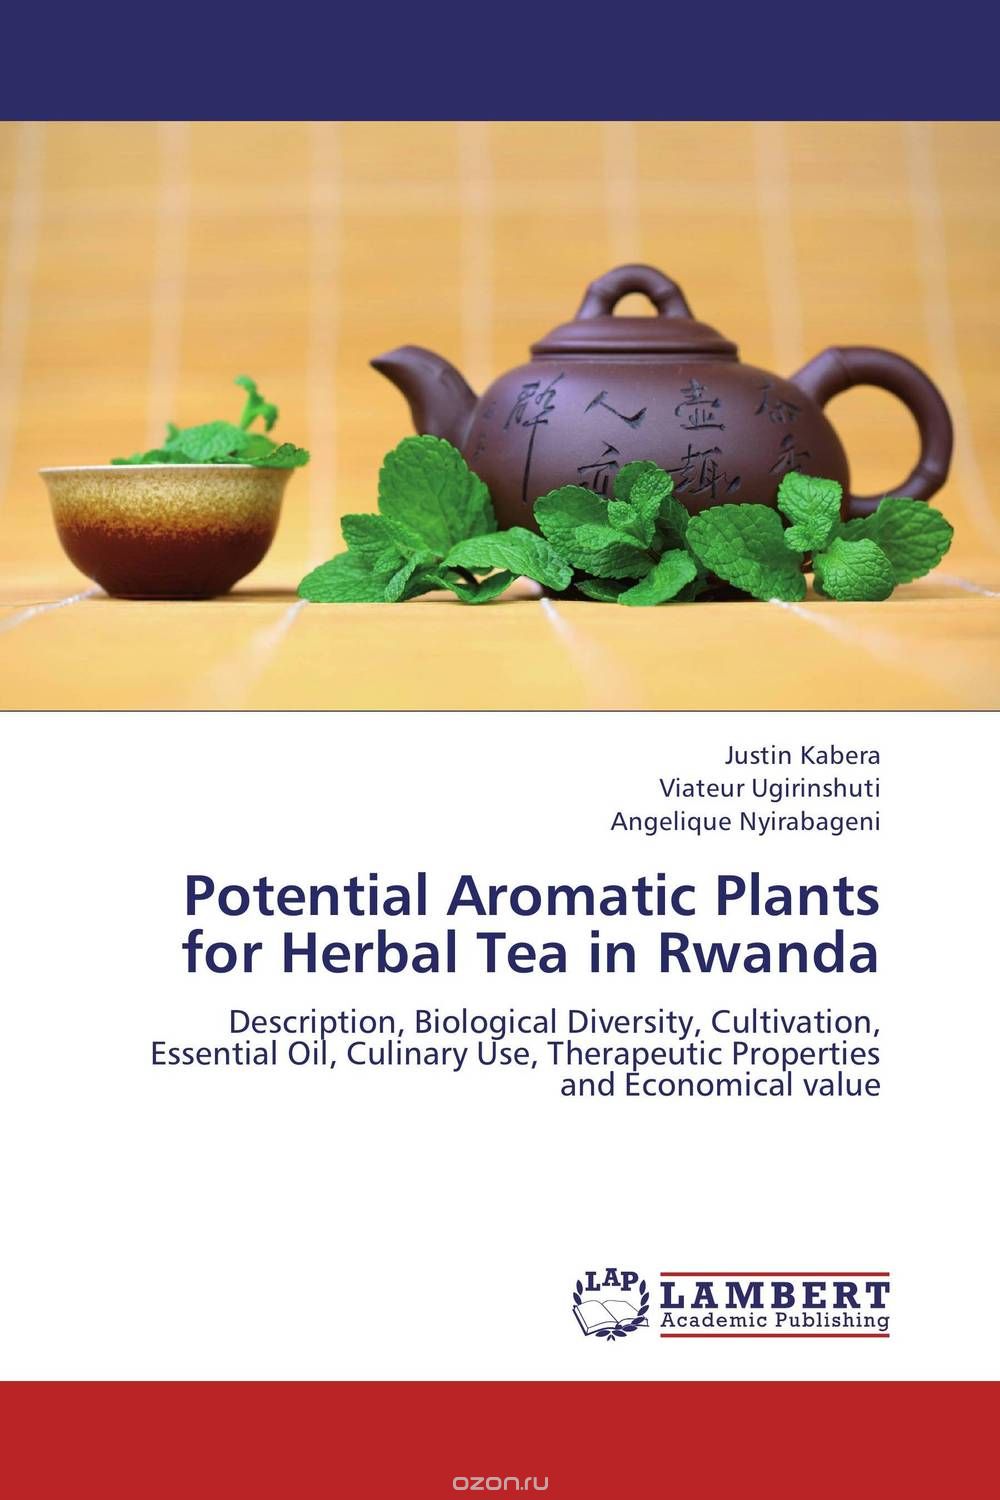 Скачать книгу "Potential Aromatic Plants for Herbal Tea in Rwanda"